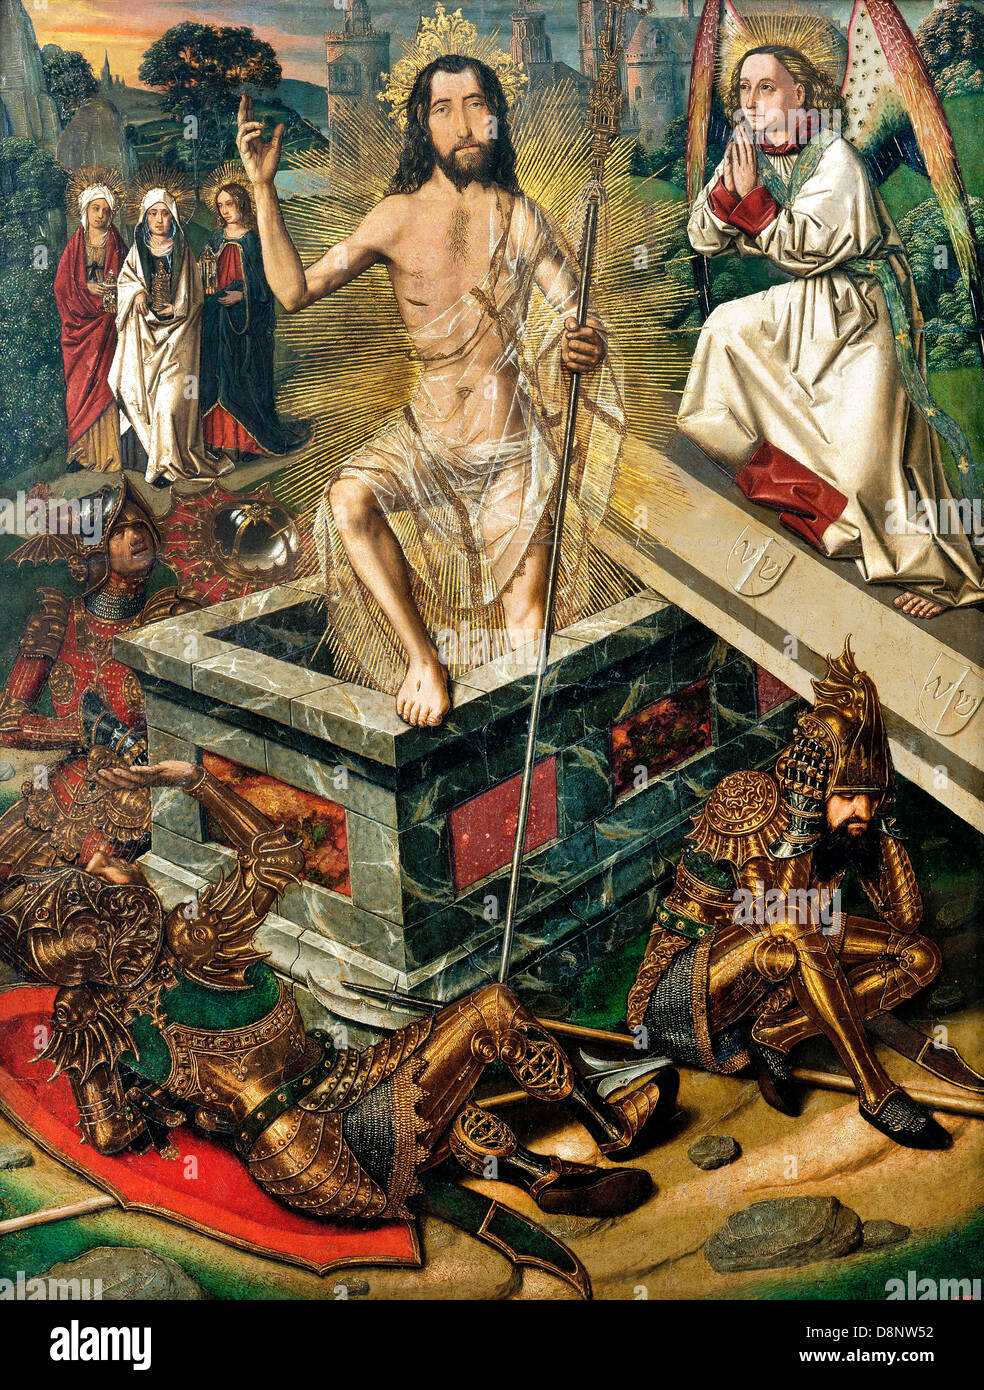 Bartolomé Bermejo, Resurrection. Circa 1475. Oil and gilding on wood. Museu Nacional d'Art de Catalunya, Barcelona, Spain. Stock Photo